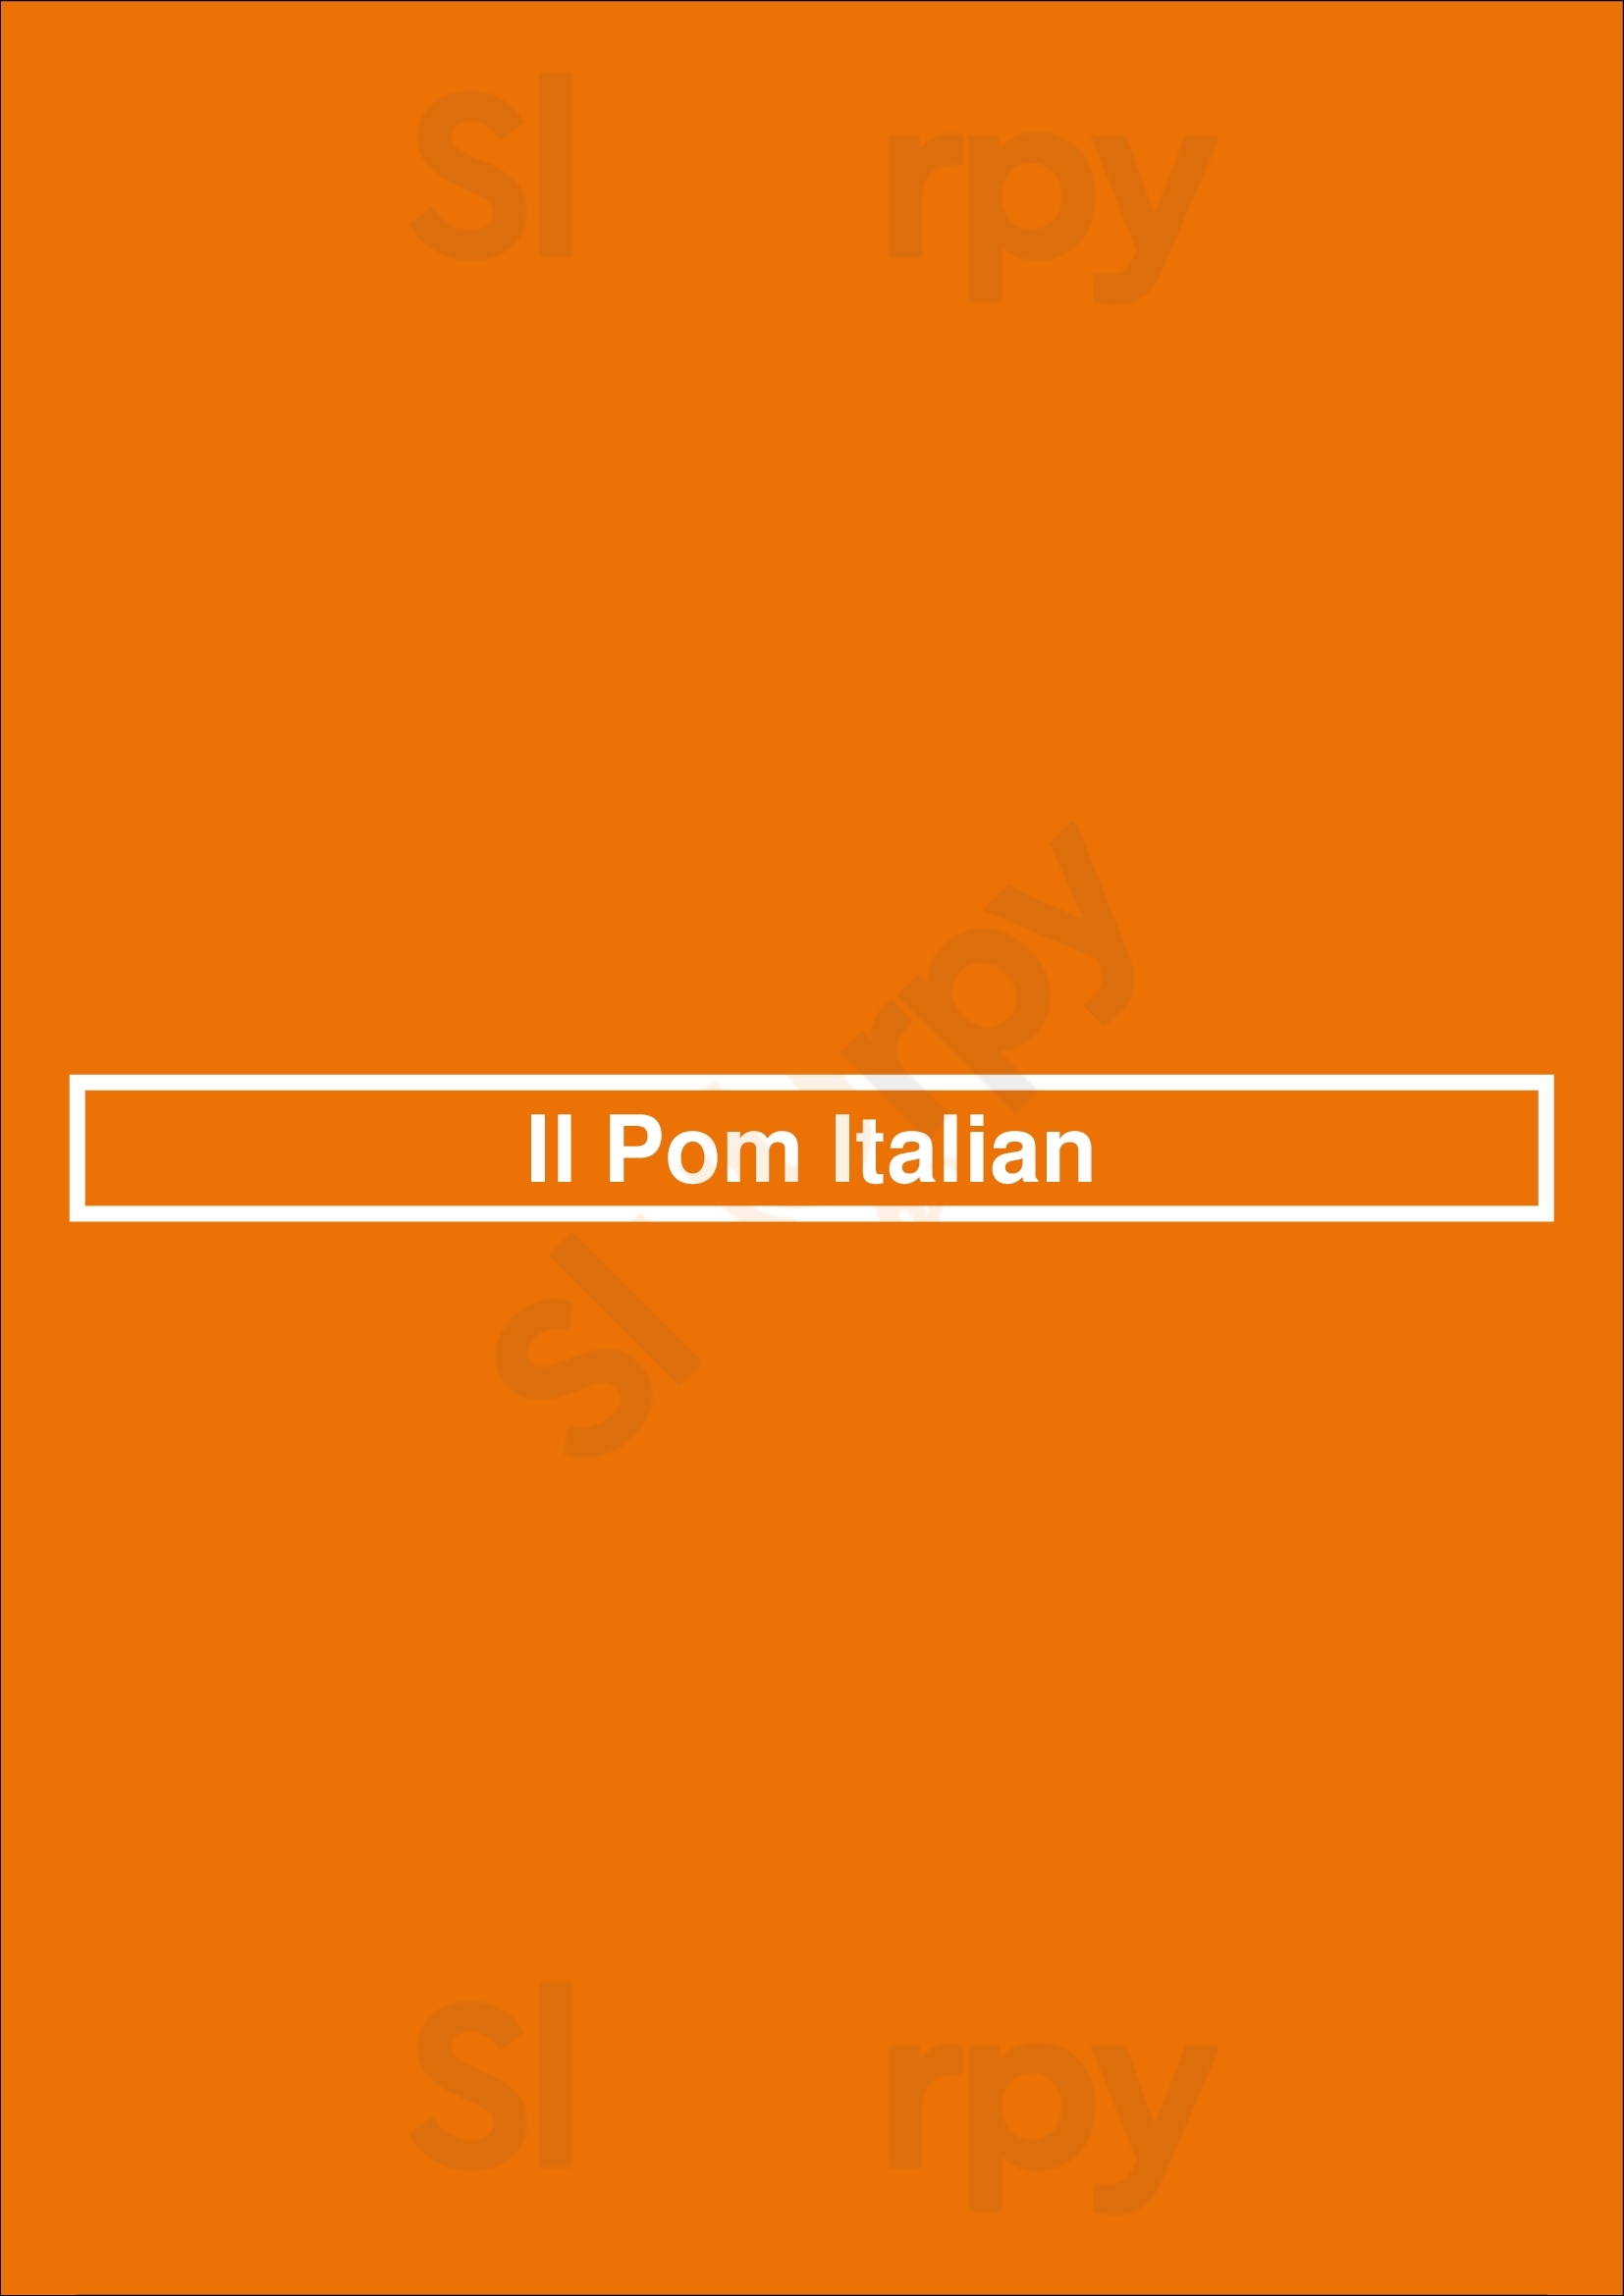 Il Pom Italian Melbourne Menu - 1